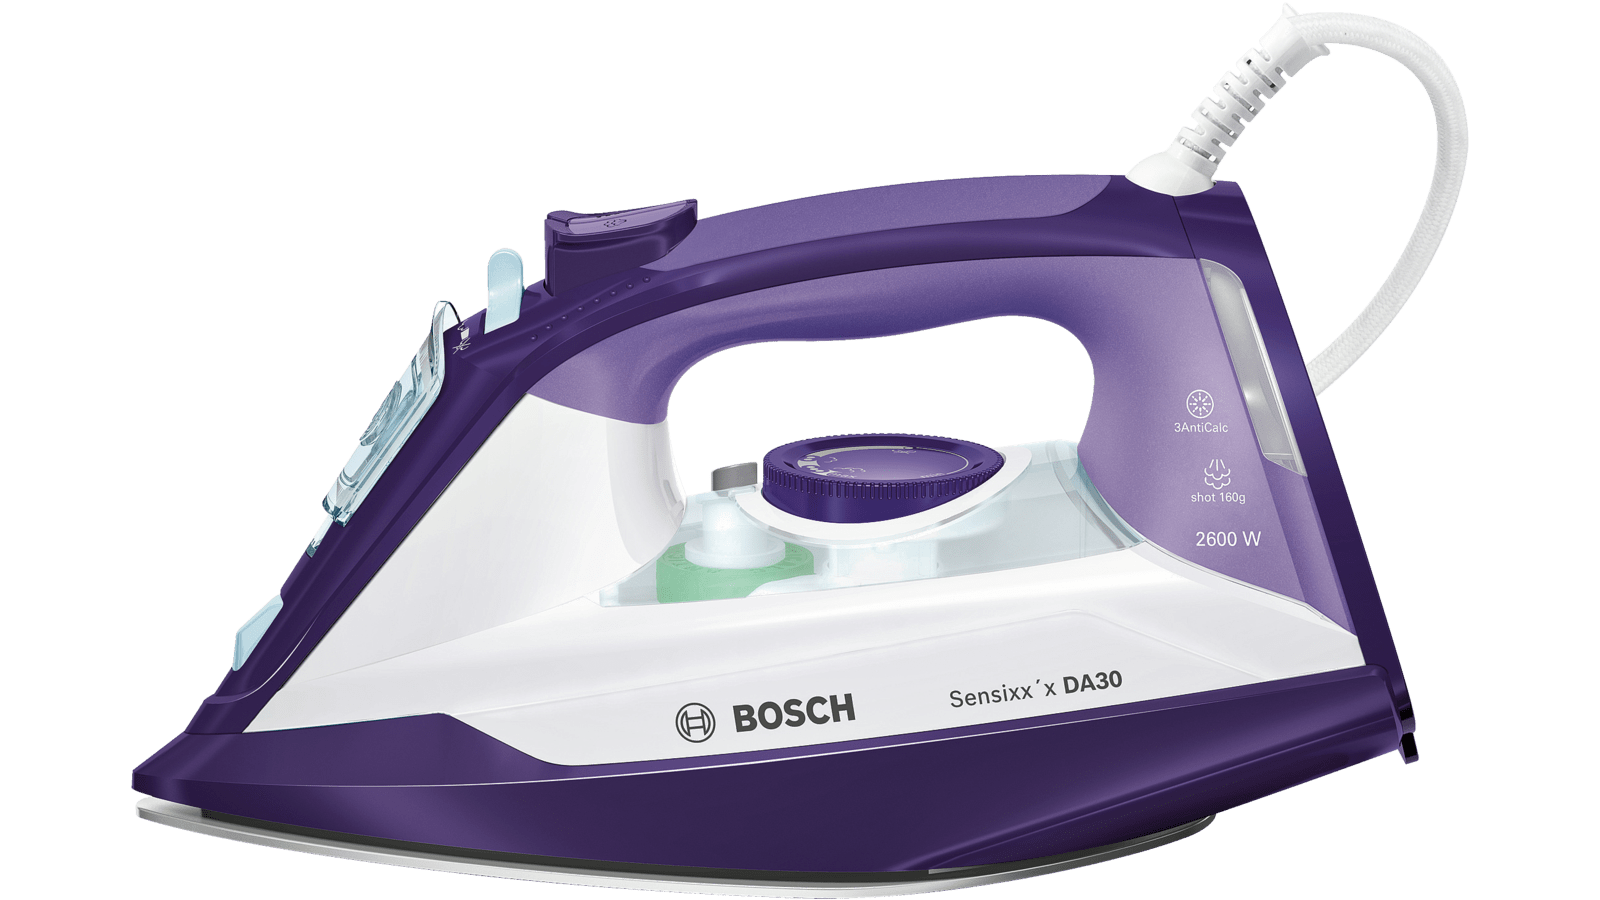 Plancha de vapor  Bosch TDA2024010, 2400W, 30 g/min, vapor